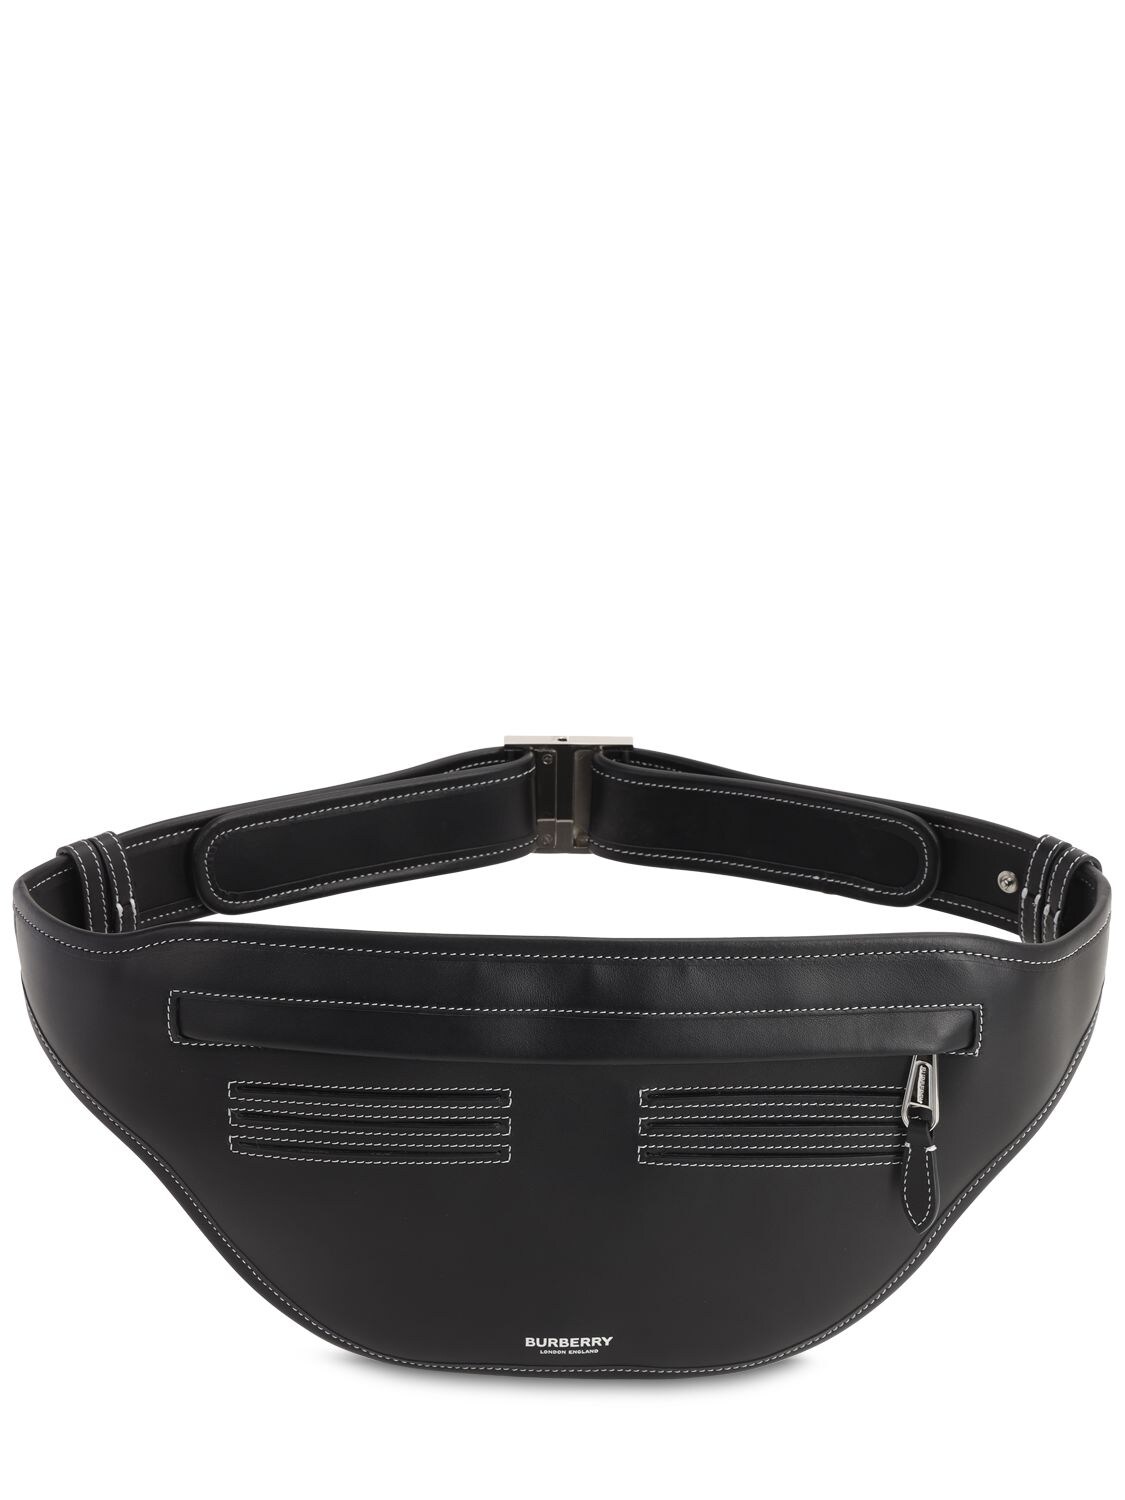 Burberry - Belt bag for Man - Brown - 8052806-A8900